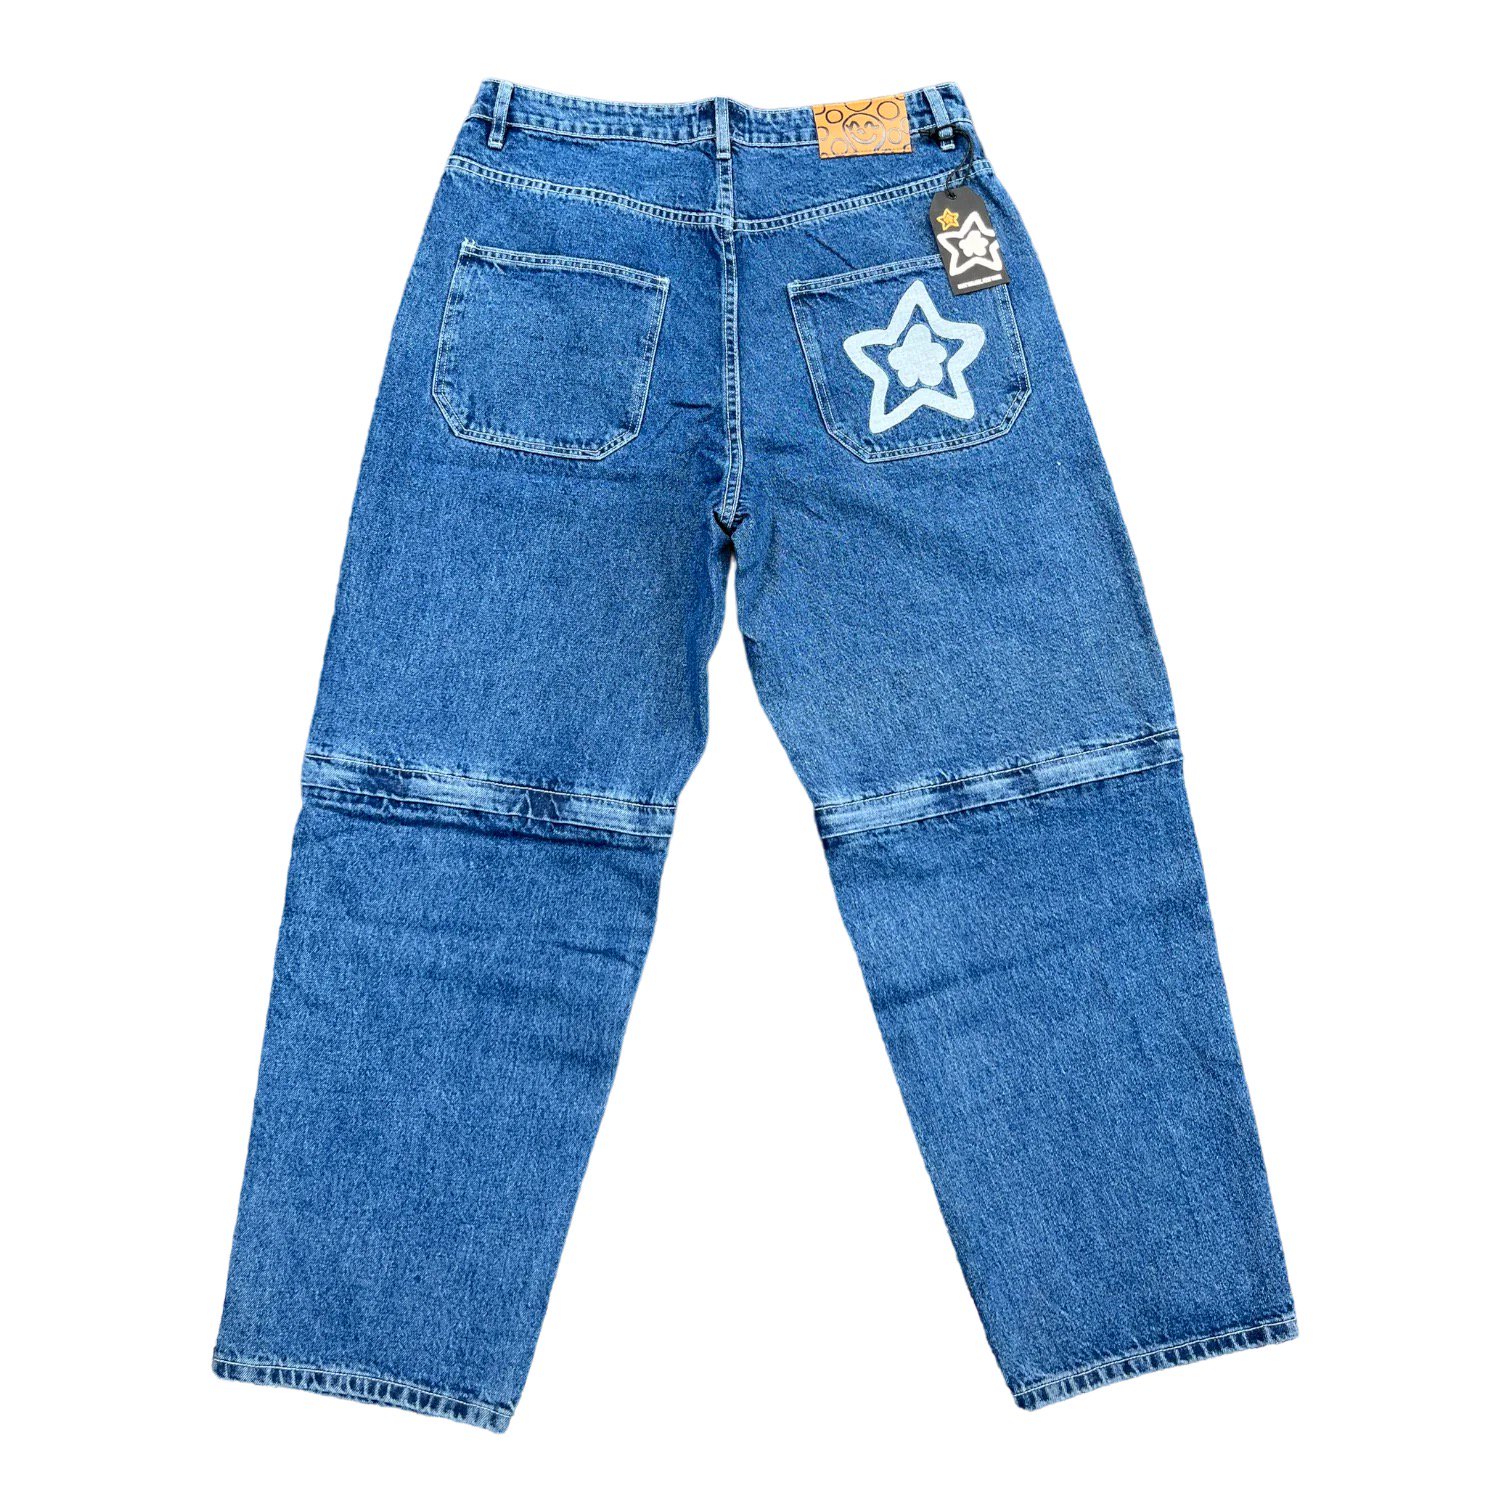 STAR TEAM<br>Zip Off Star Jeans<br>